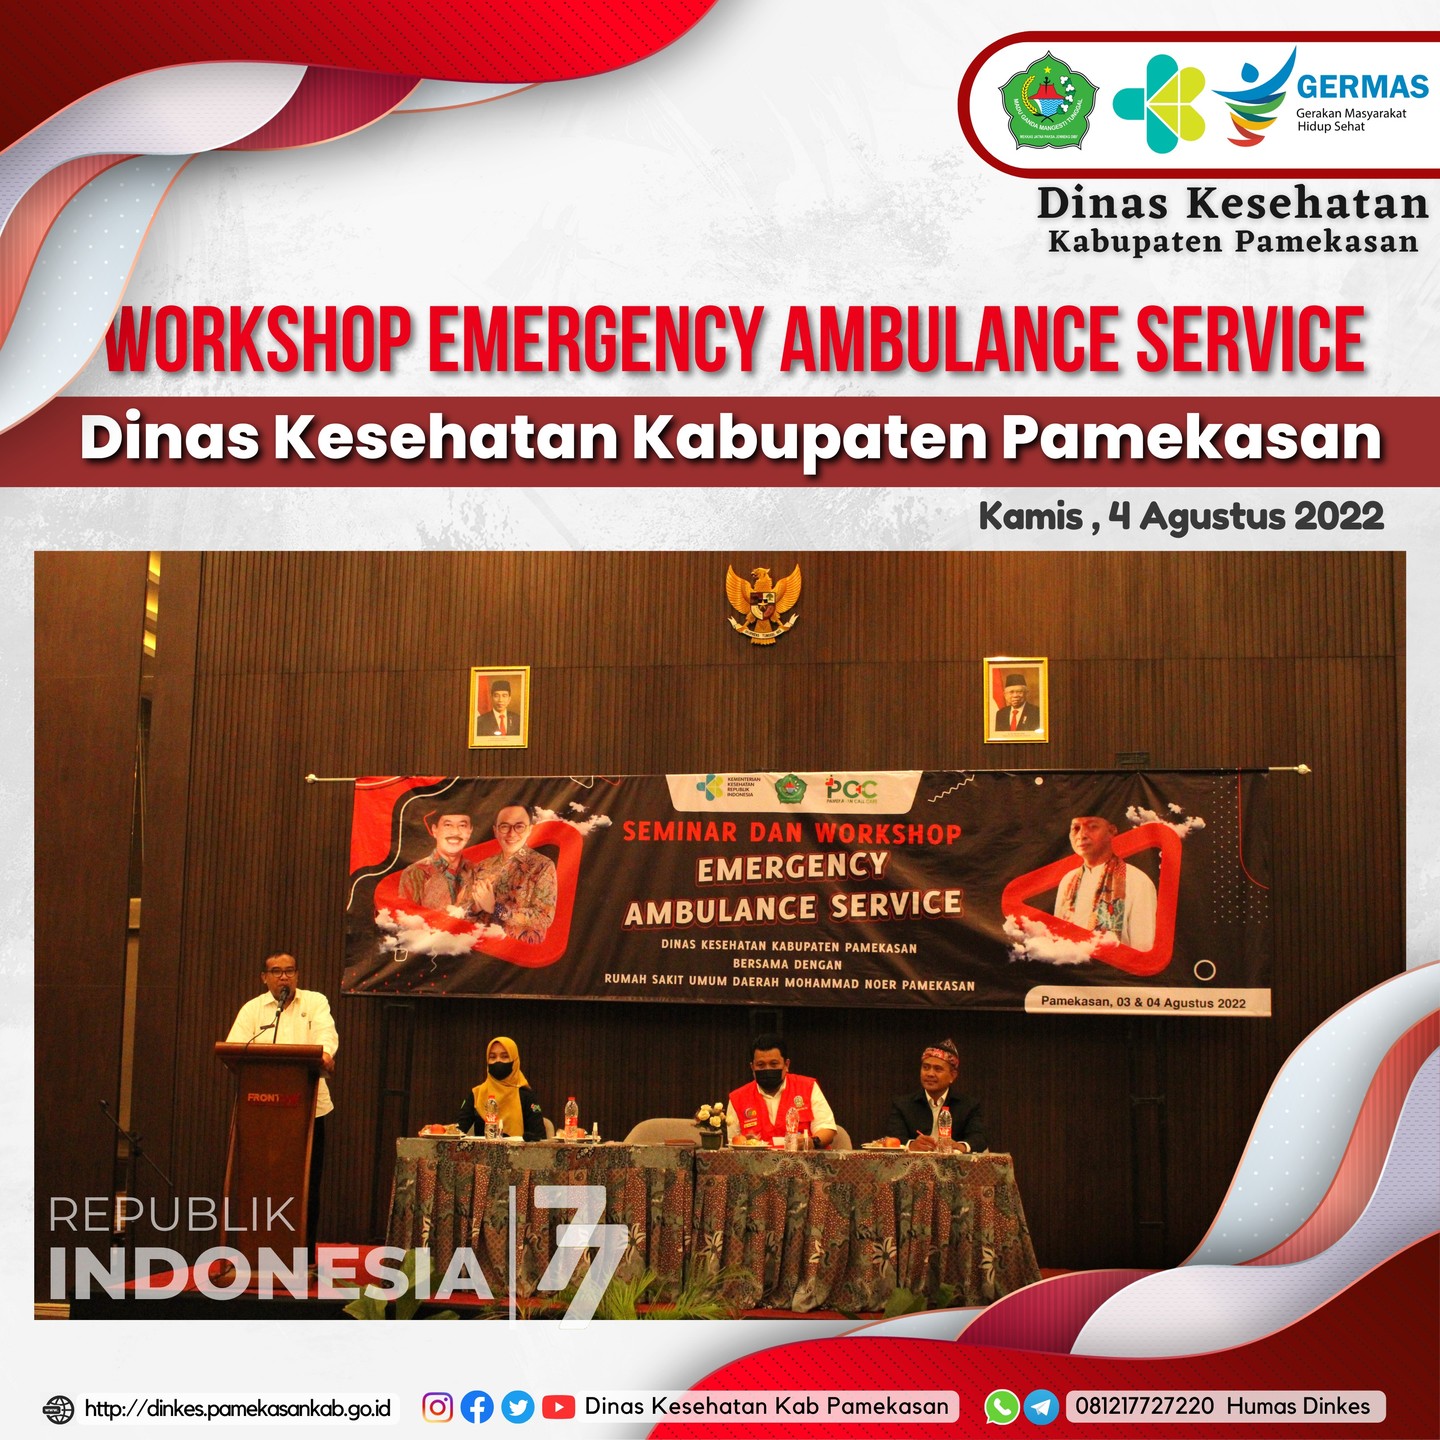 Seminar dan Workshop Emergency Ambulance Service